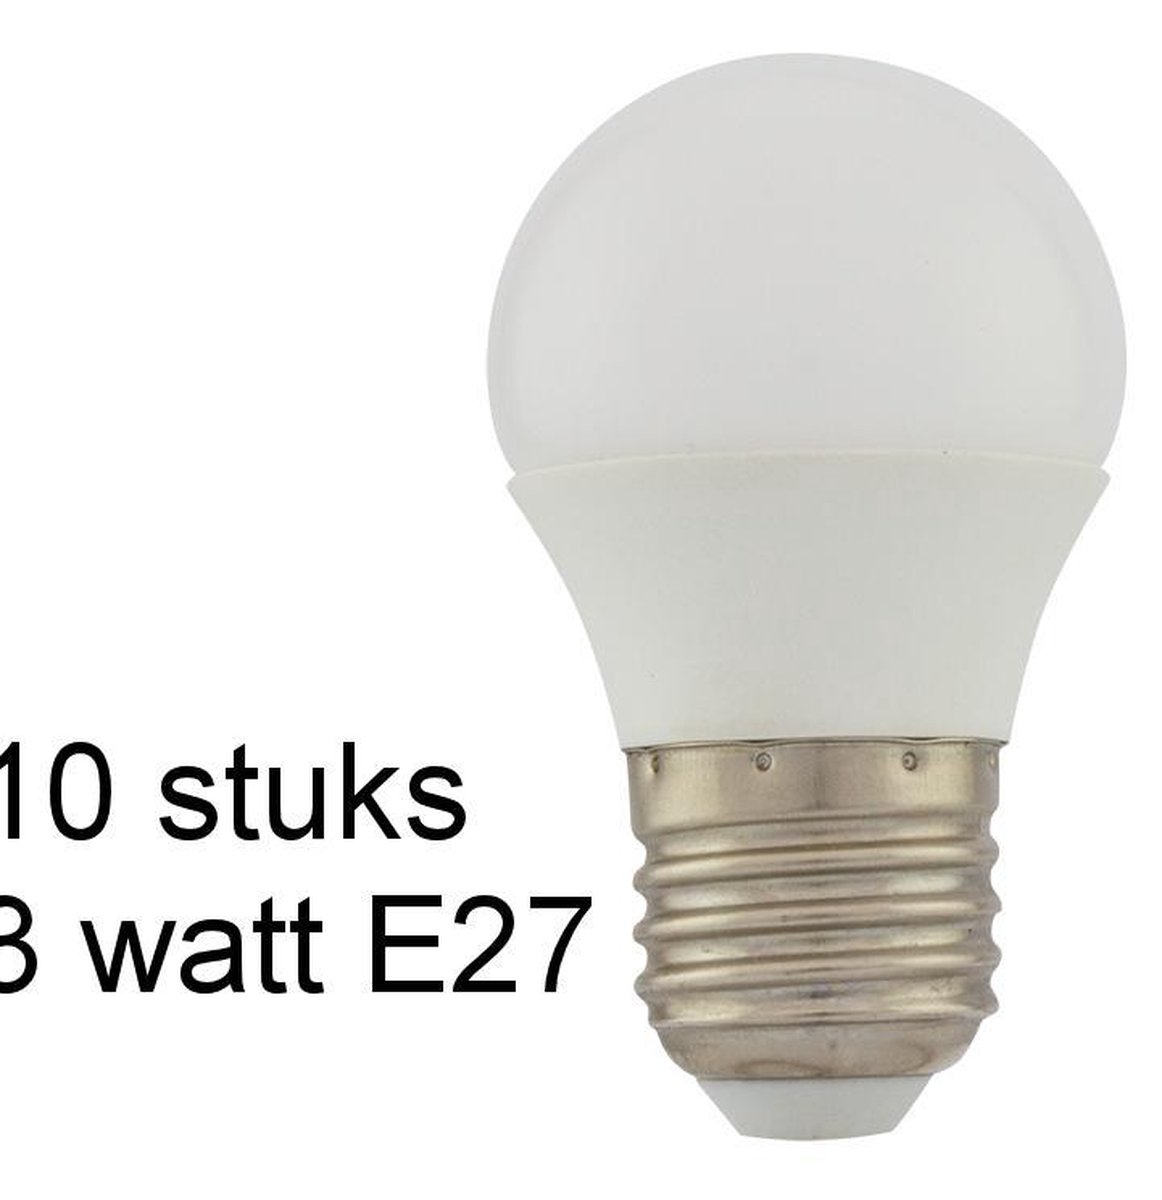 Bestuiver calorie Motivatie 10 stuks 3 watt led lamp - E27 - Warm-wit (2800K) - 255 lumen | bol.com